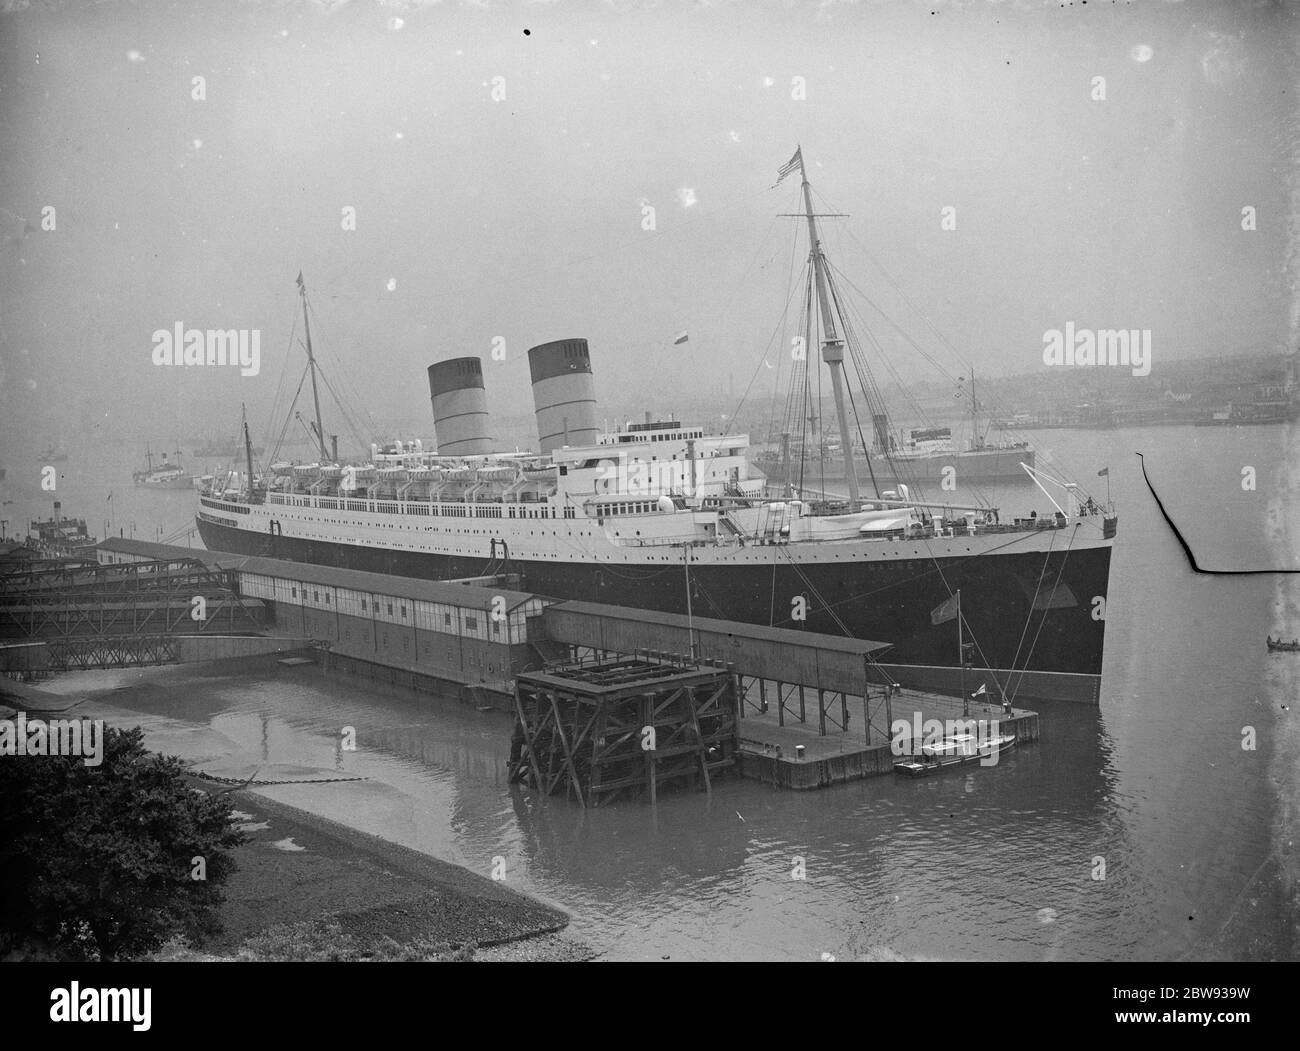 Mauretania ship hi-res stock photography and images - Alamy